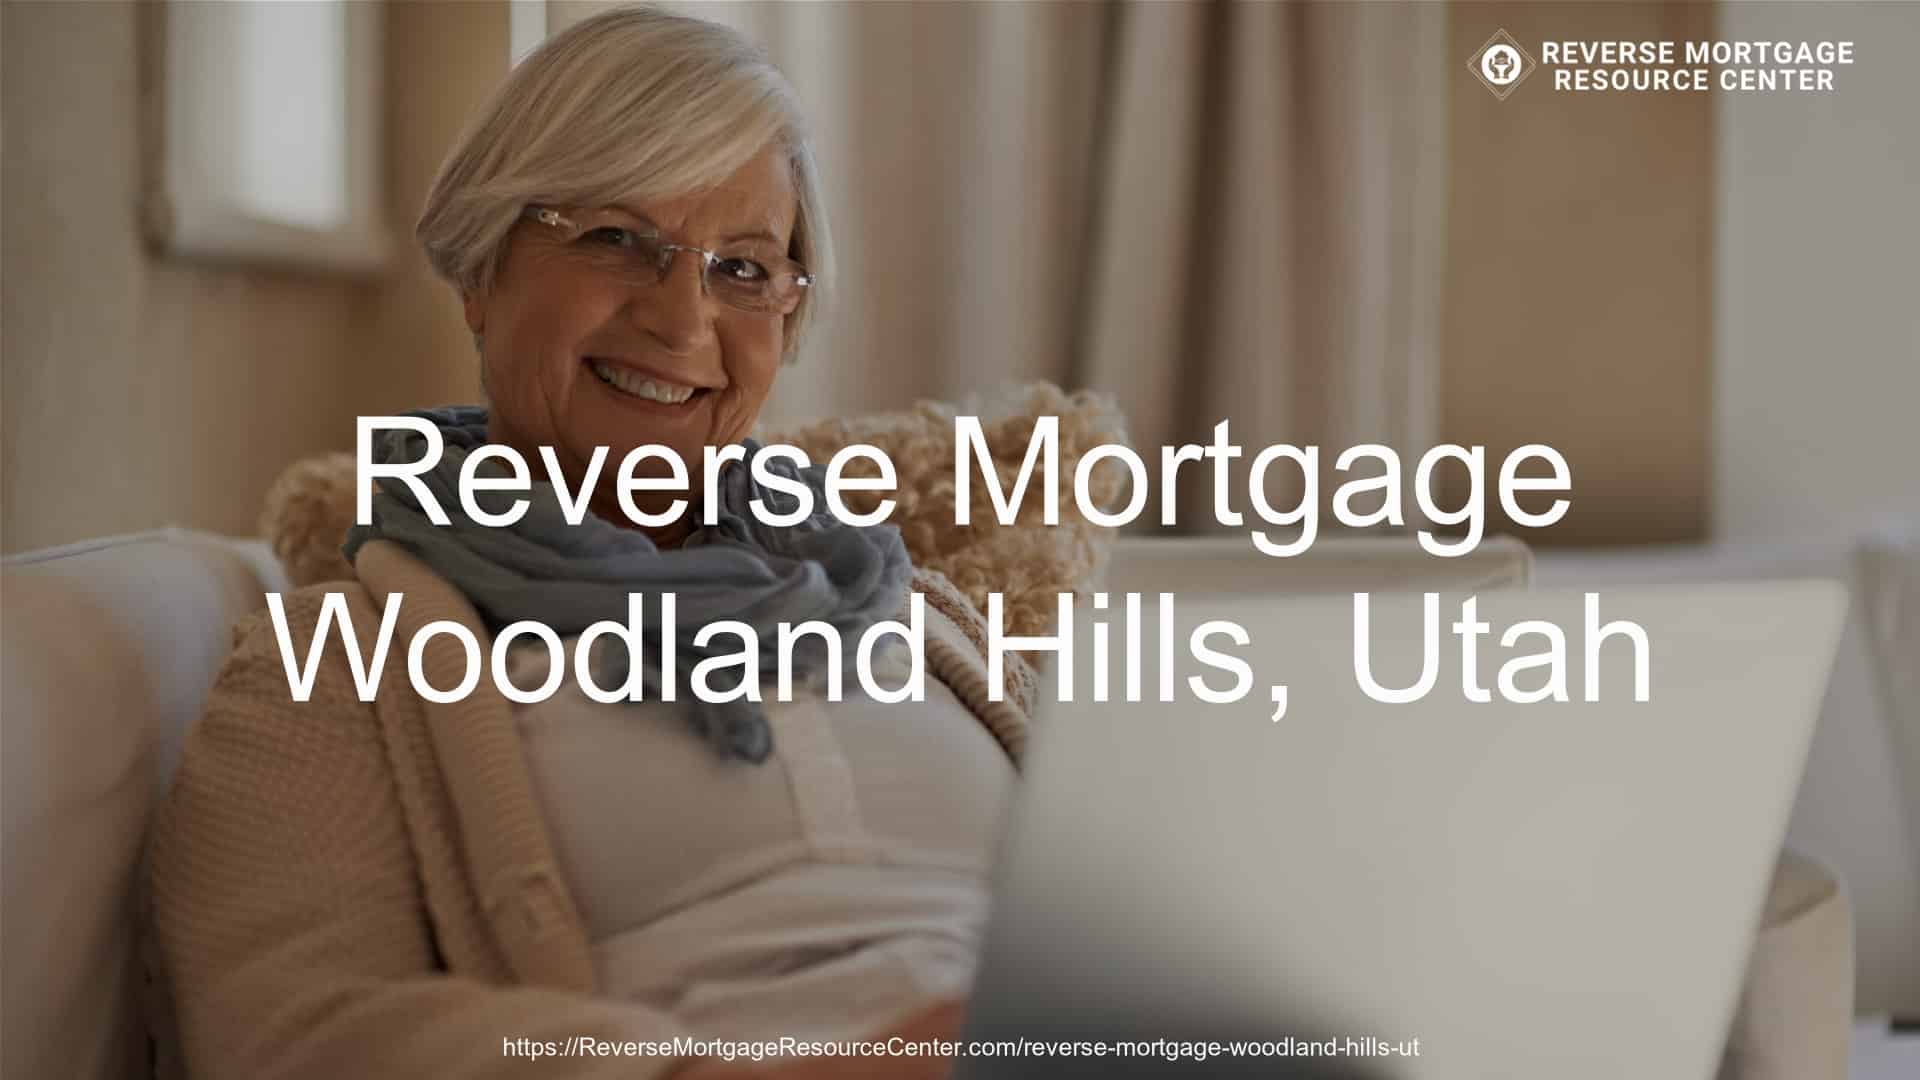 Reverse Mortgage Loans in Woodland Hills Utah